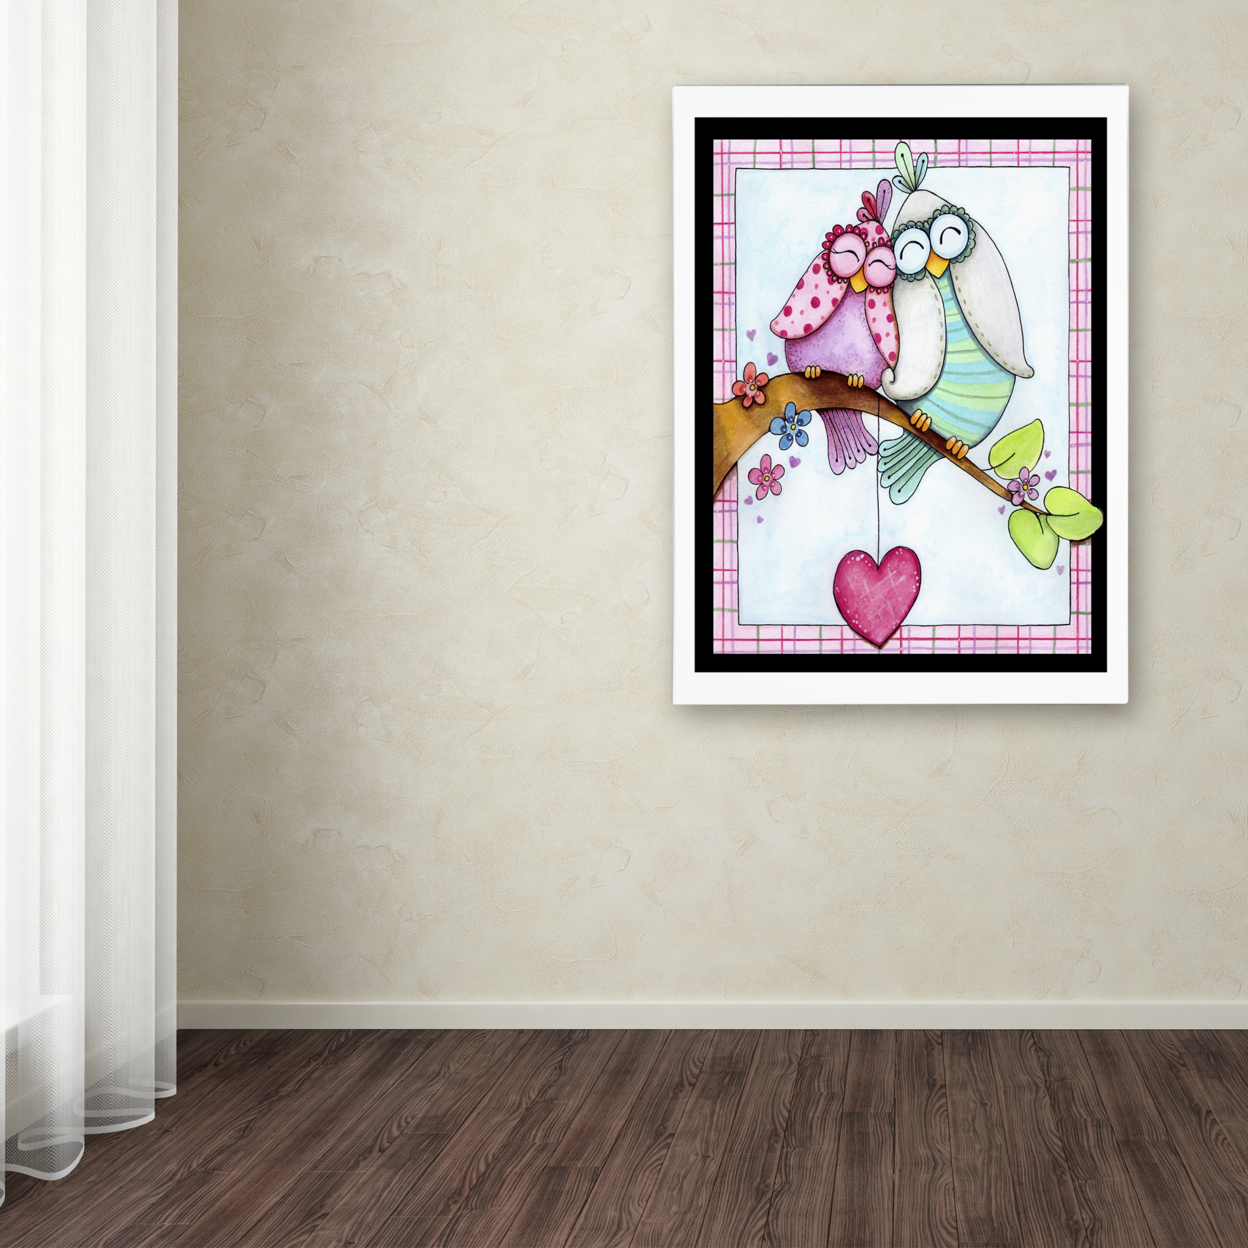 Jennifer Nilsson 'Love In The Air' Canvas Wall Art 35 X 47 Inches